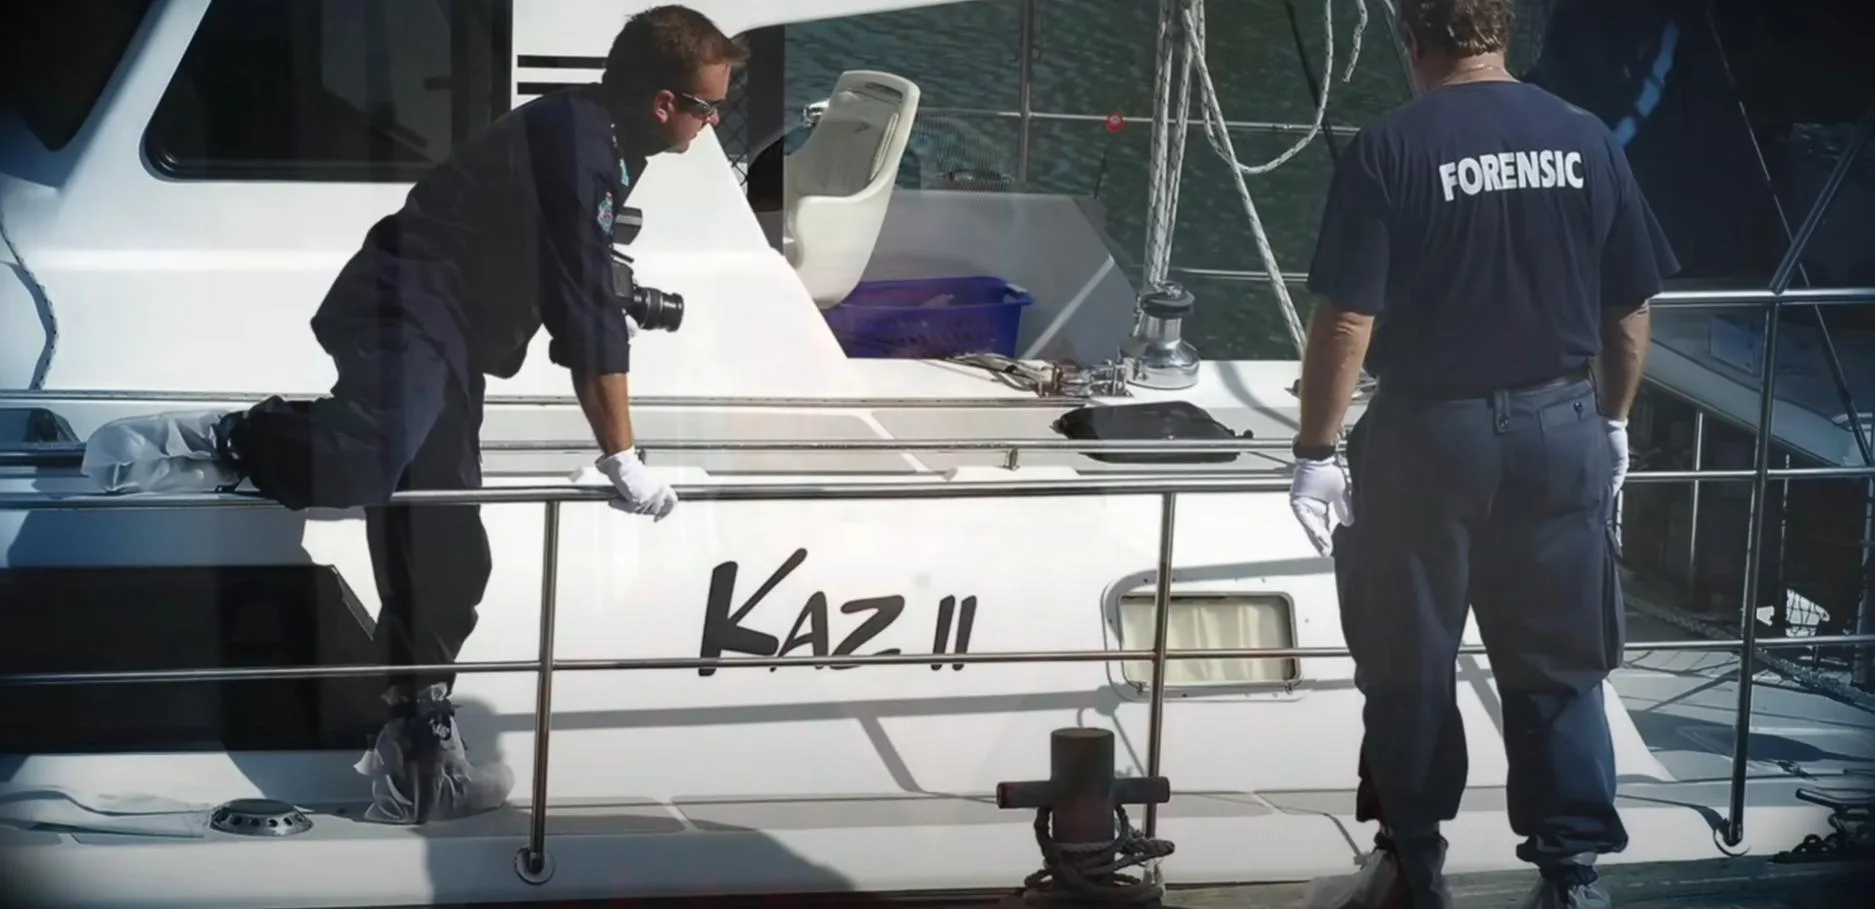 Investigators searching the Kaz II